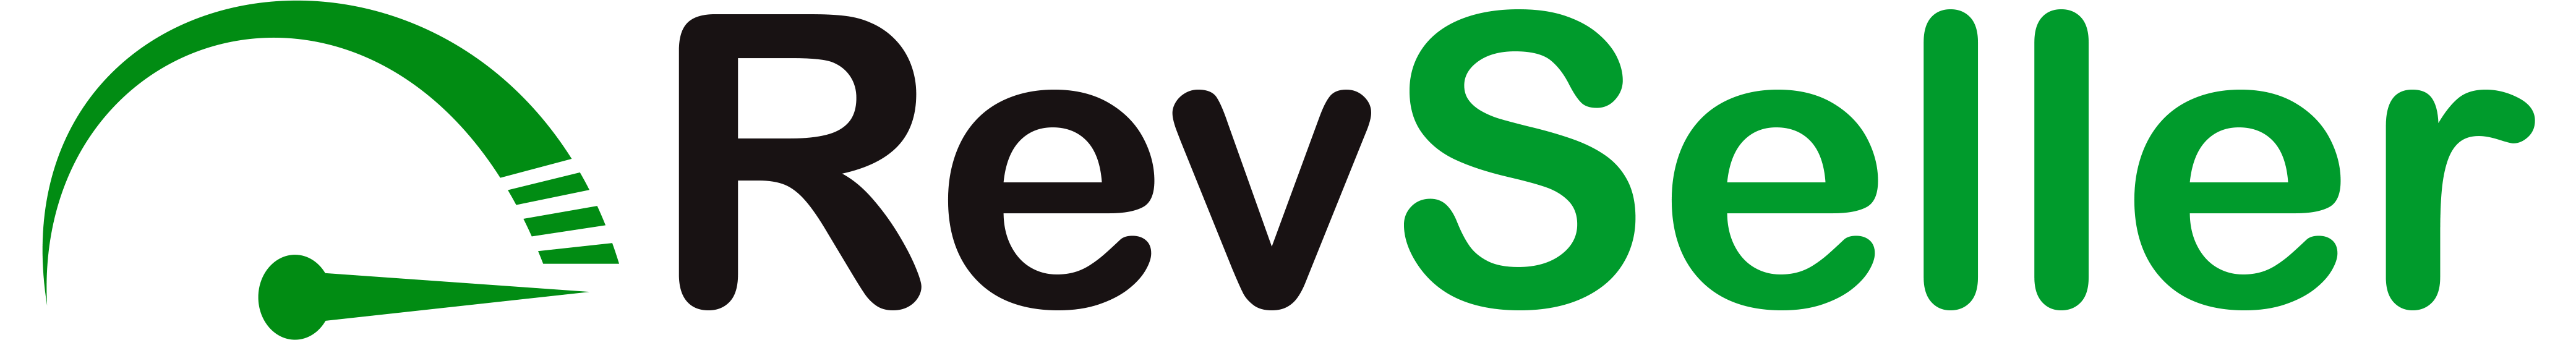 Revseller logo